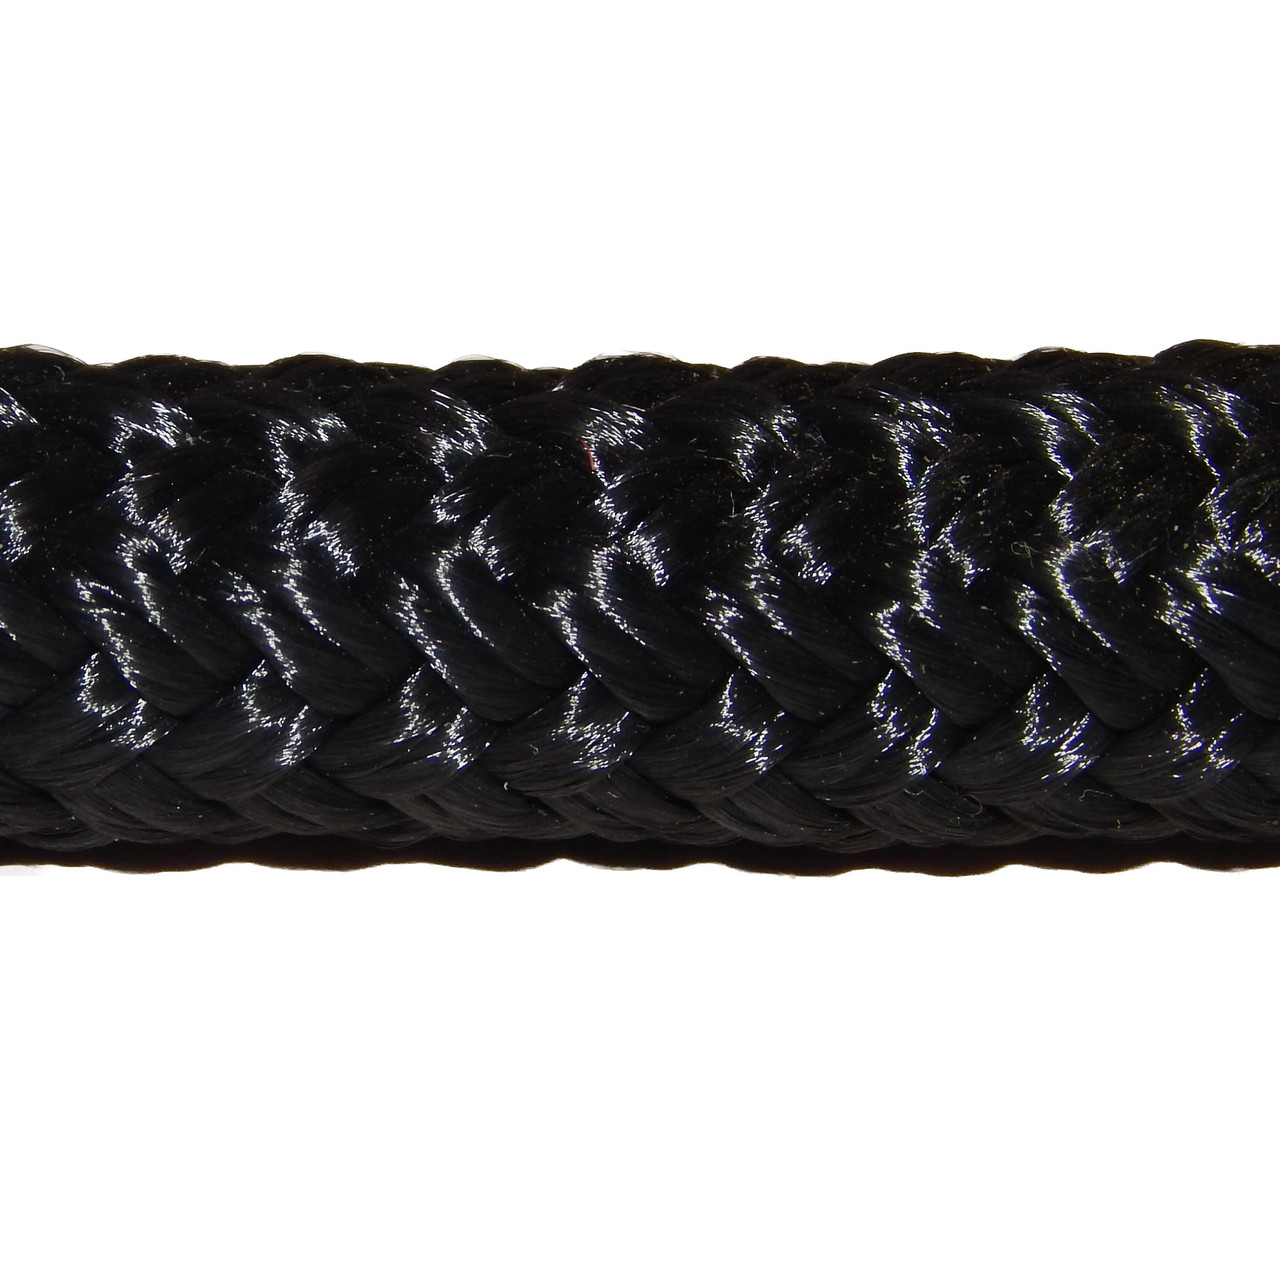 CWC 5/16 Nylon Double Braid Rope  3263 lbs Breaking Strength - #345025